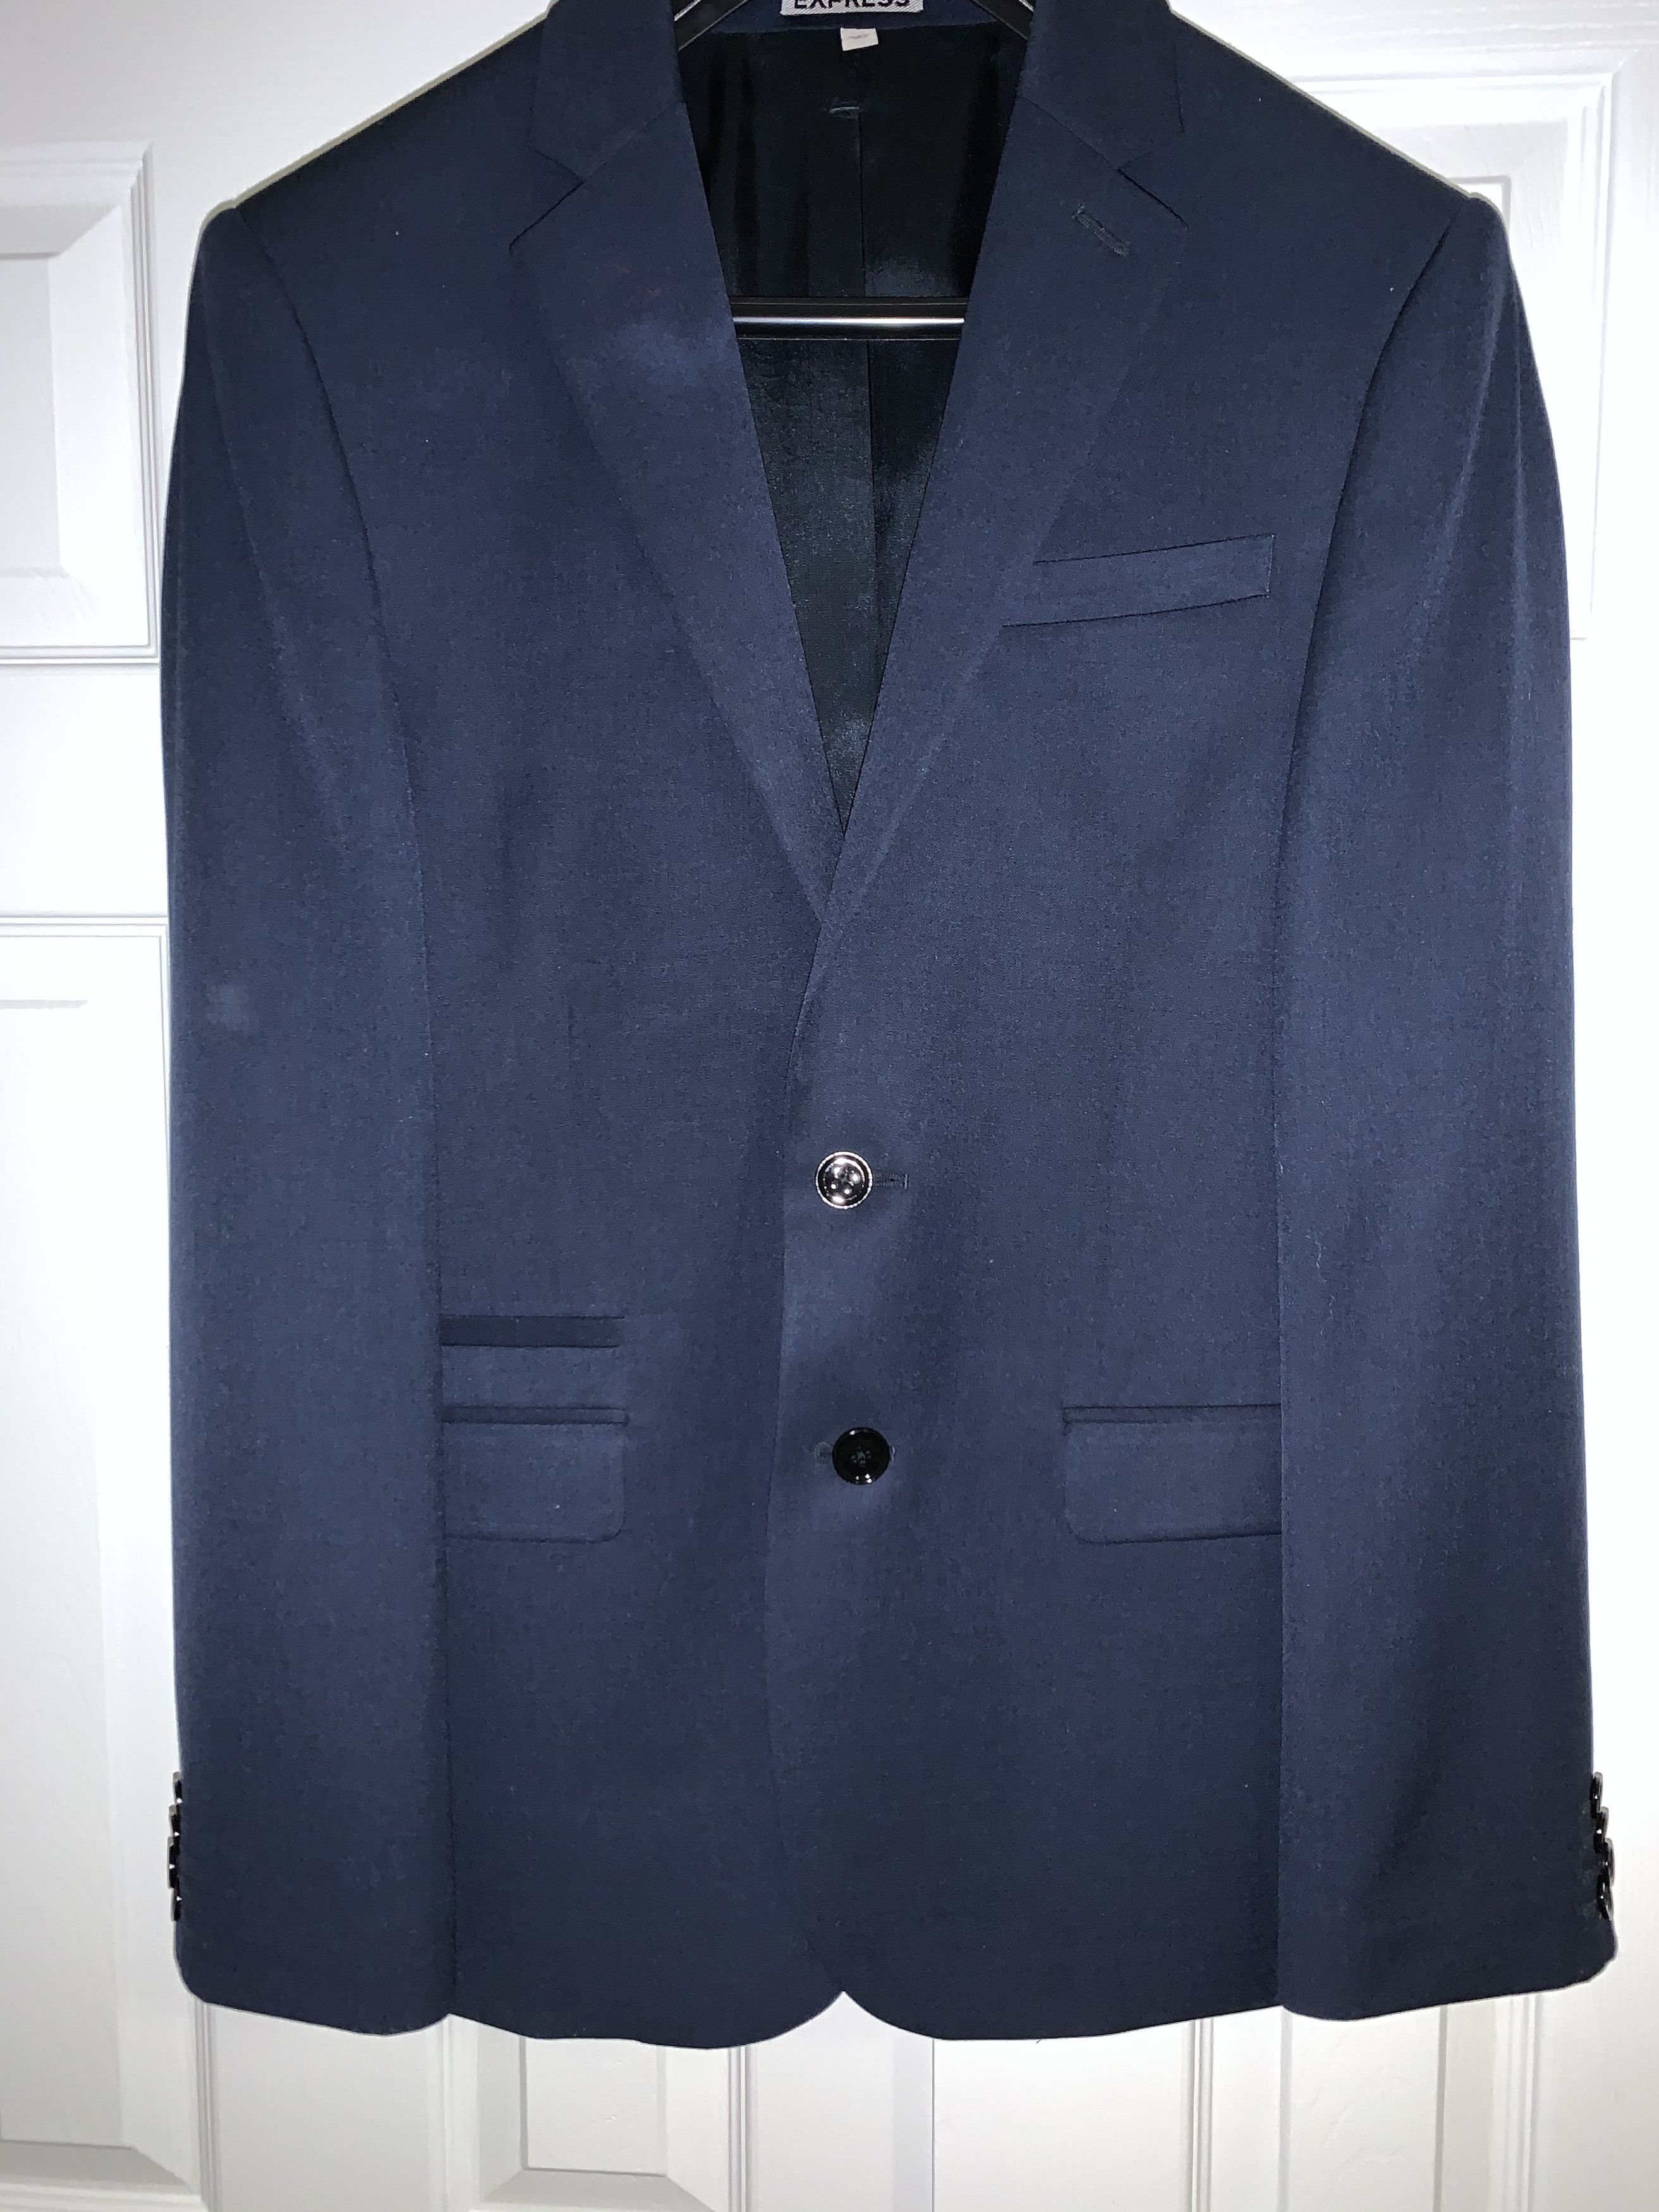 Express Express Slim Navy Suit Jacket | Grailed